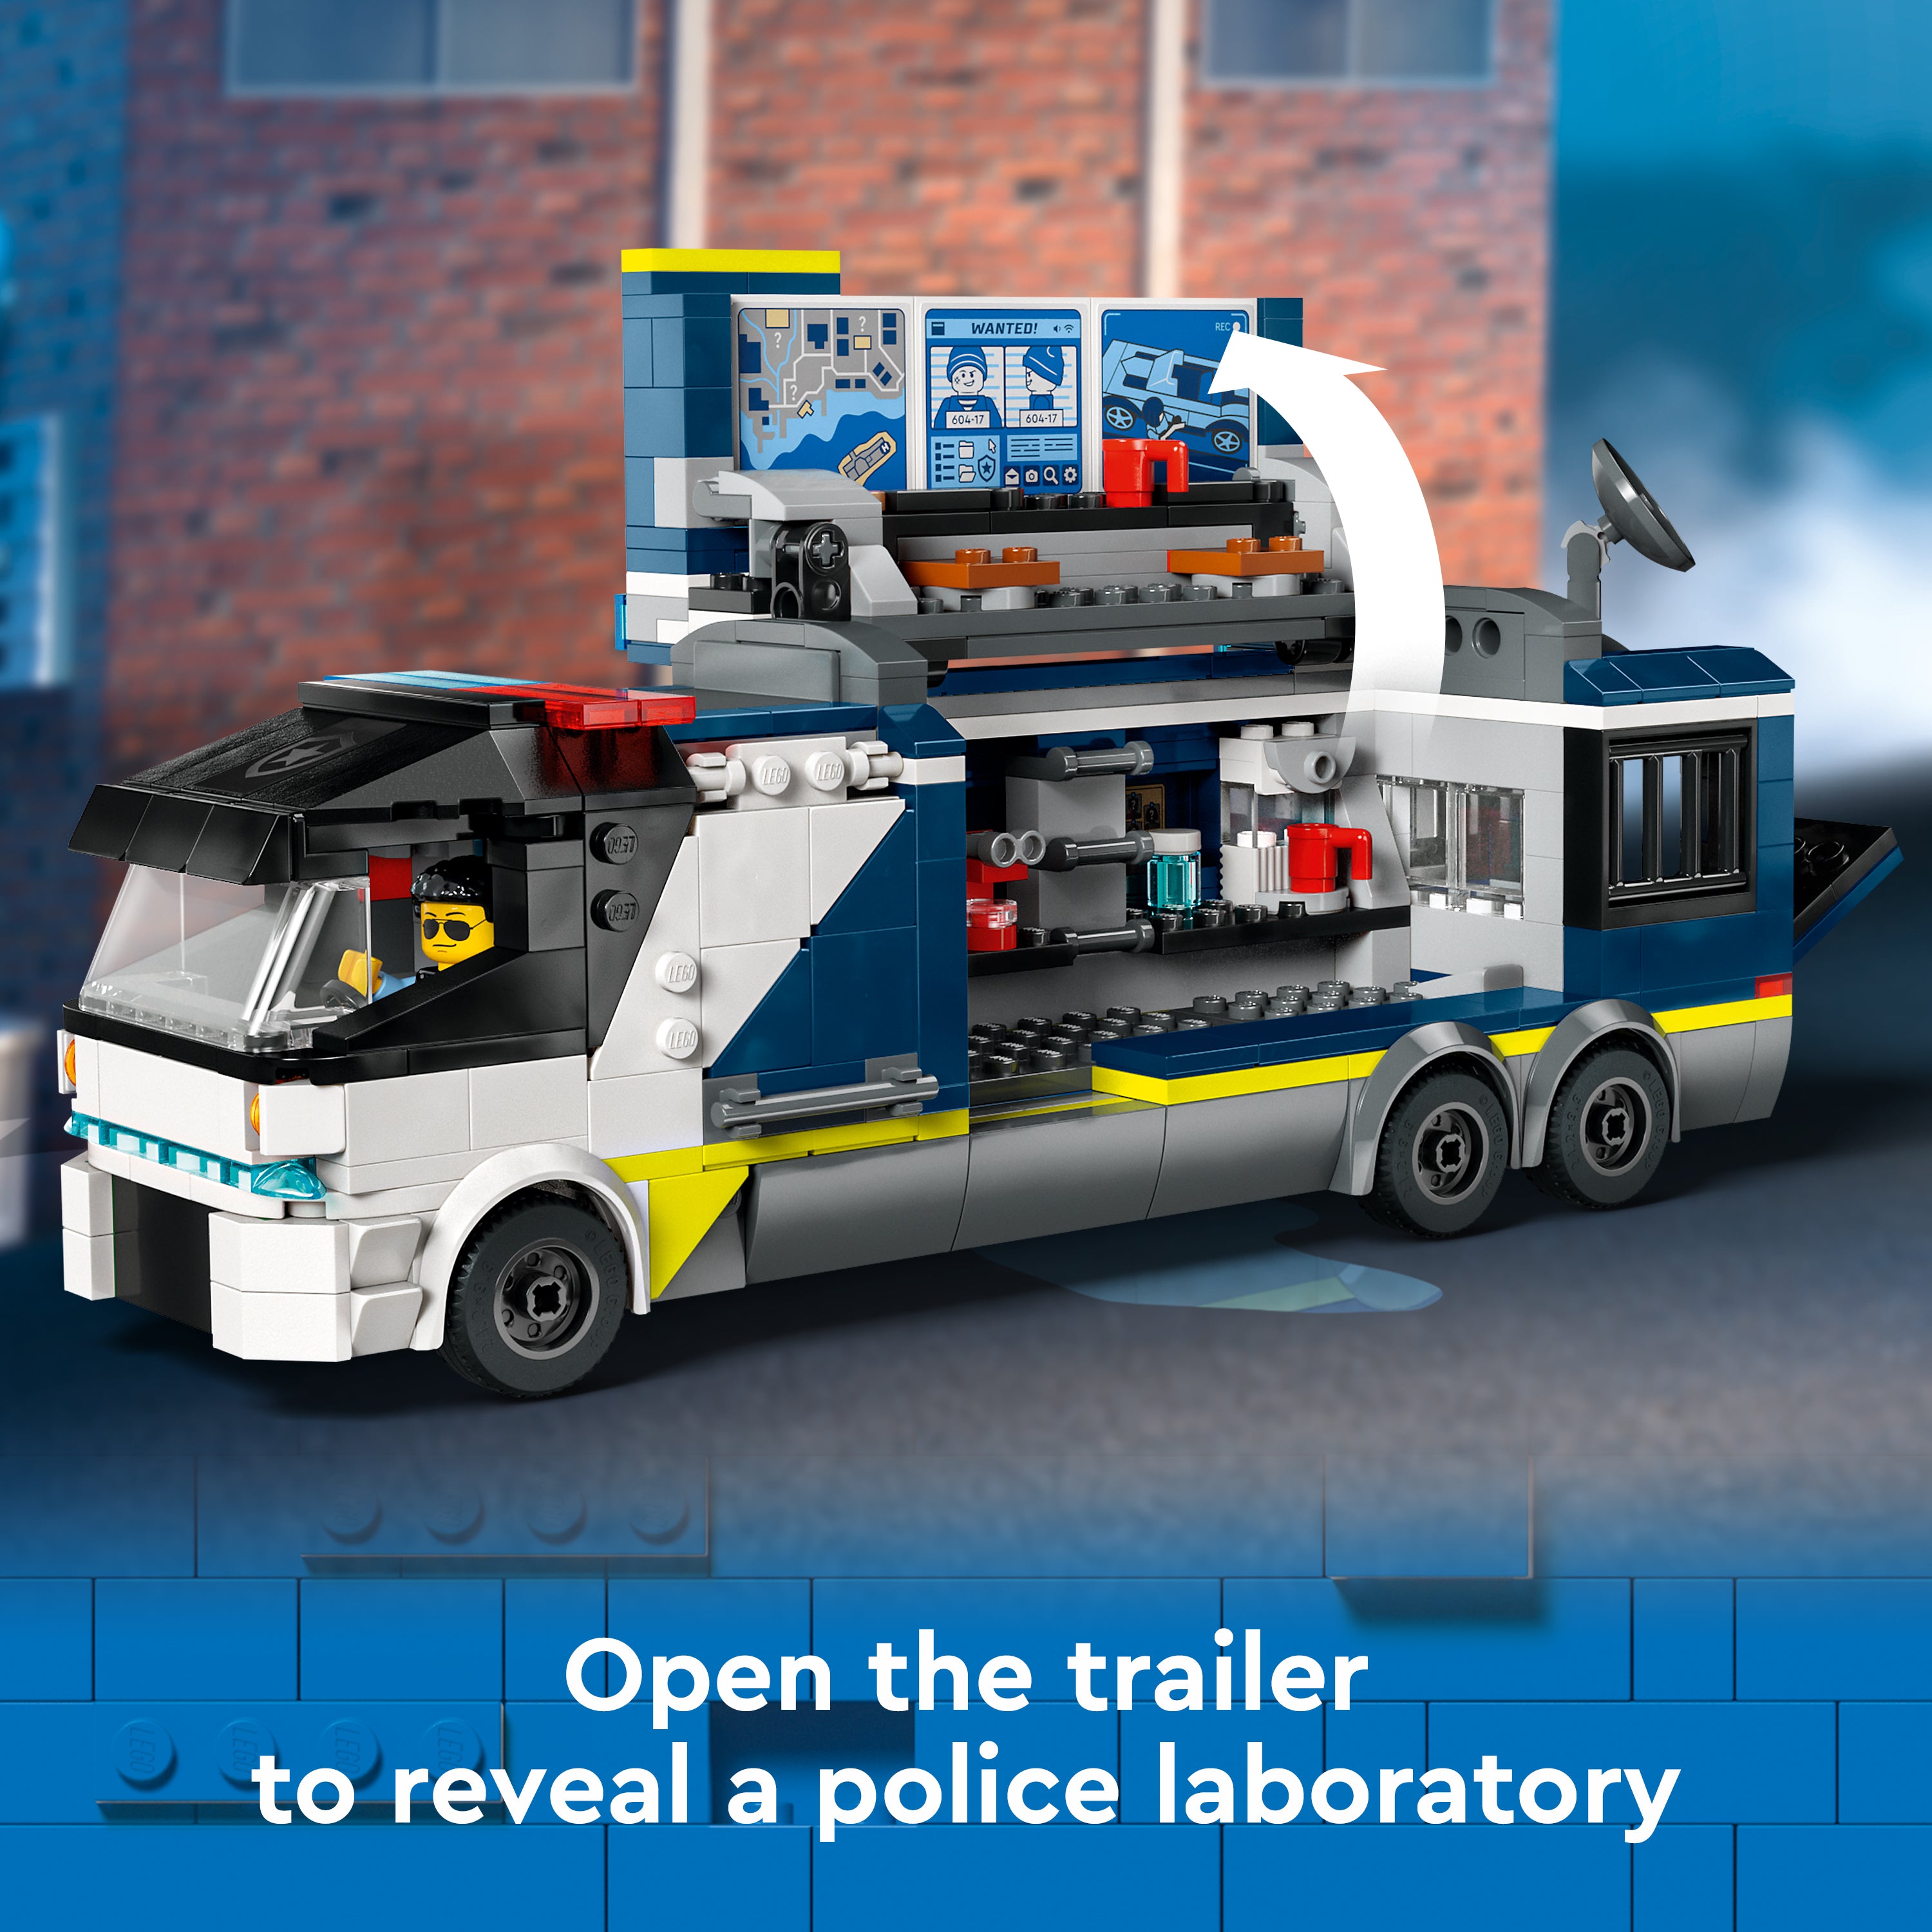 Lego 60418 Police Mobile Crime Lab